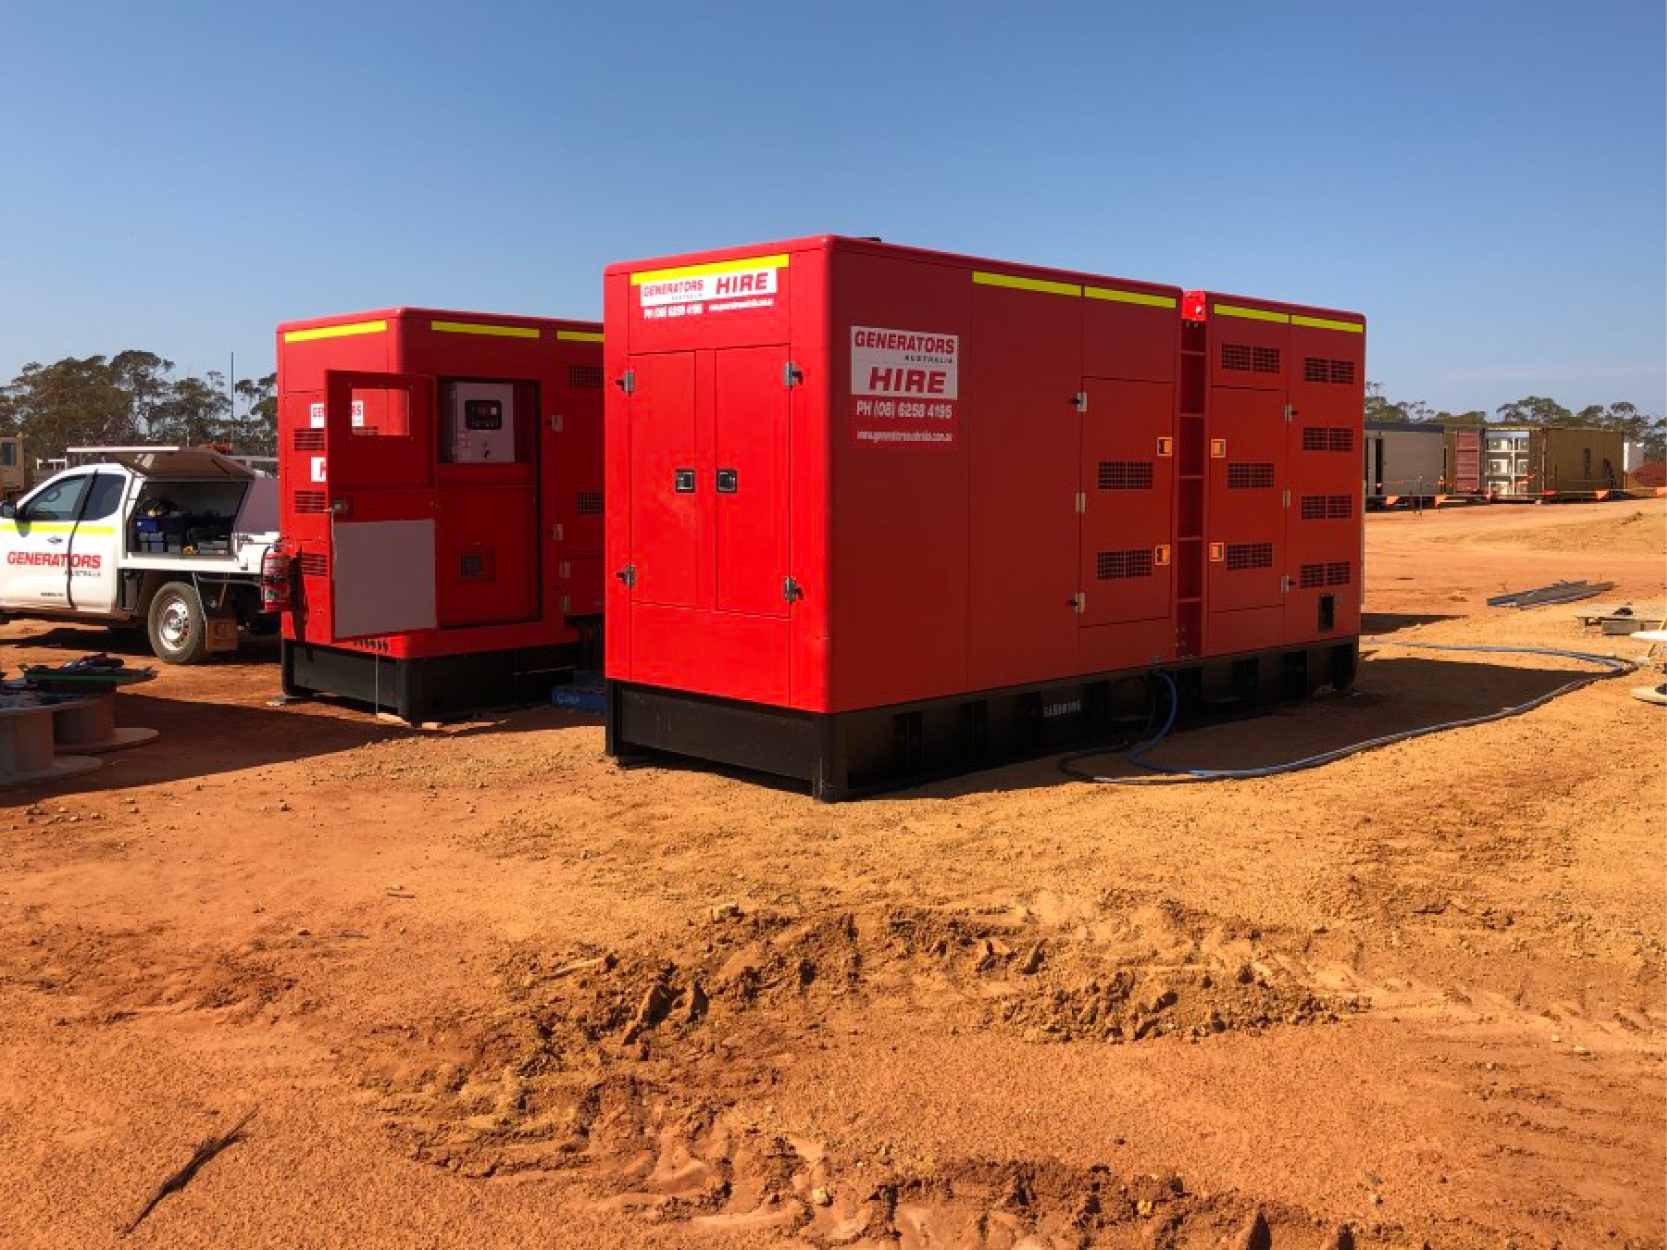 Generators Australia is powering Wiluna mine site